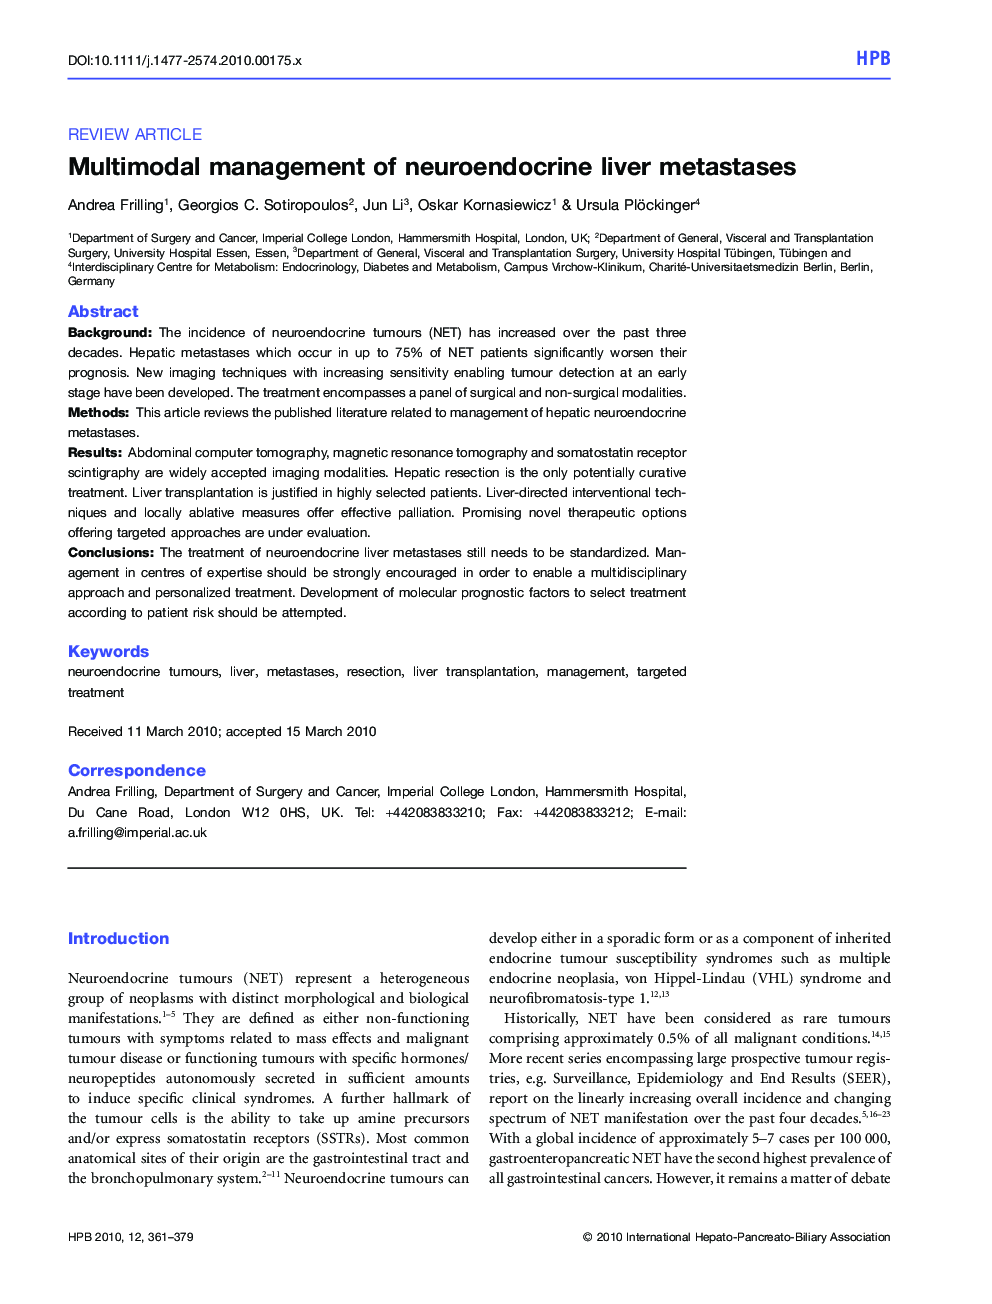 Multimodal management of neuroendocrine liver metastases